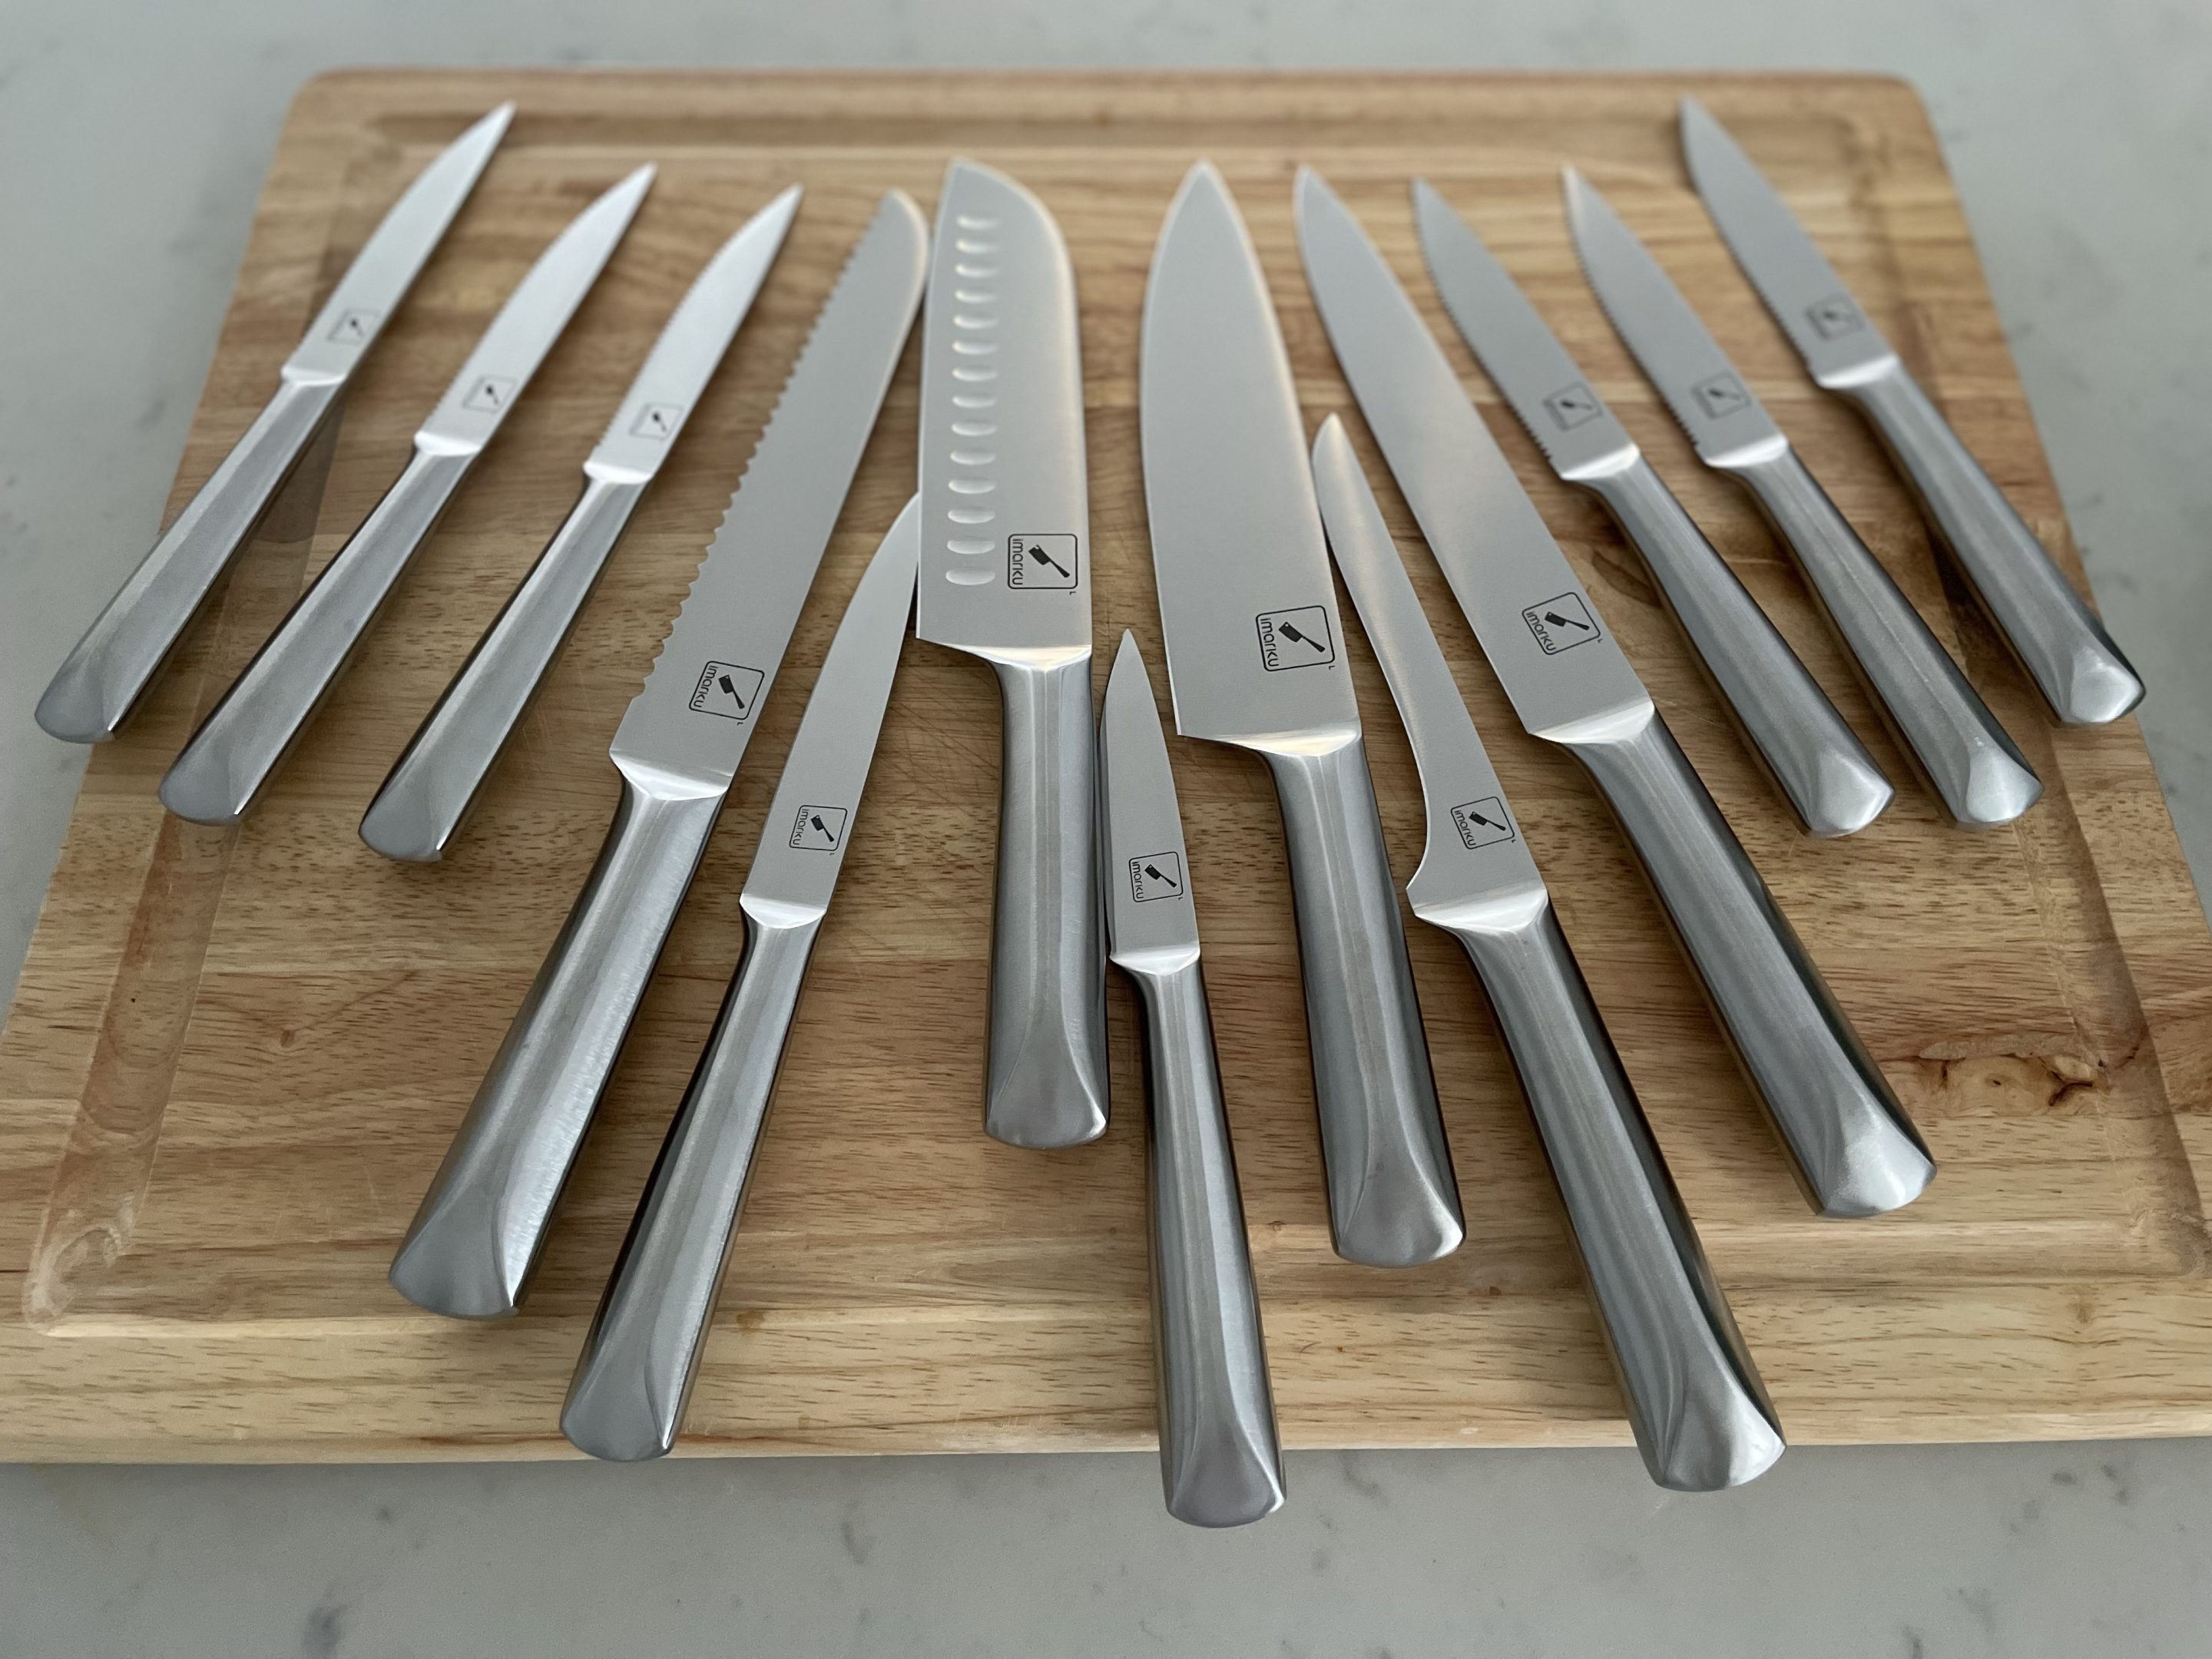 The knives of the Imarku 16-piece knife set.